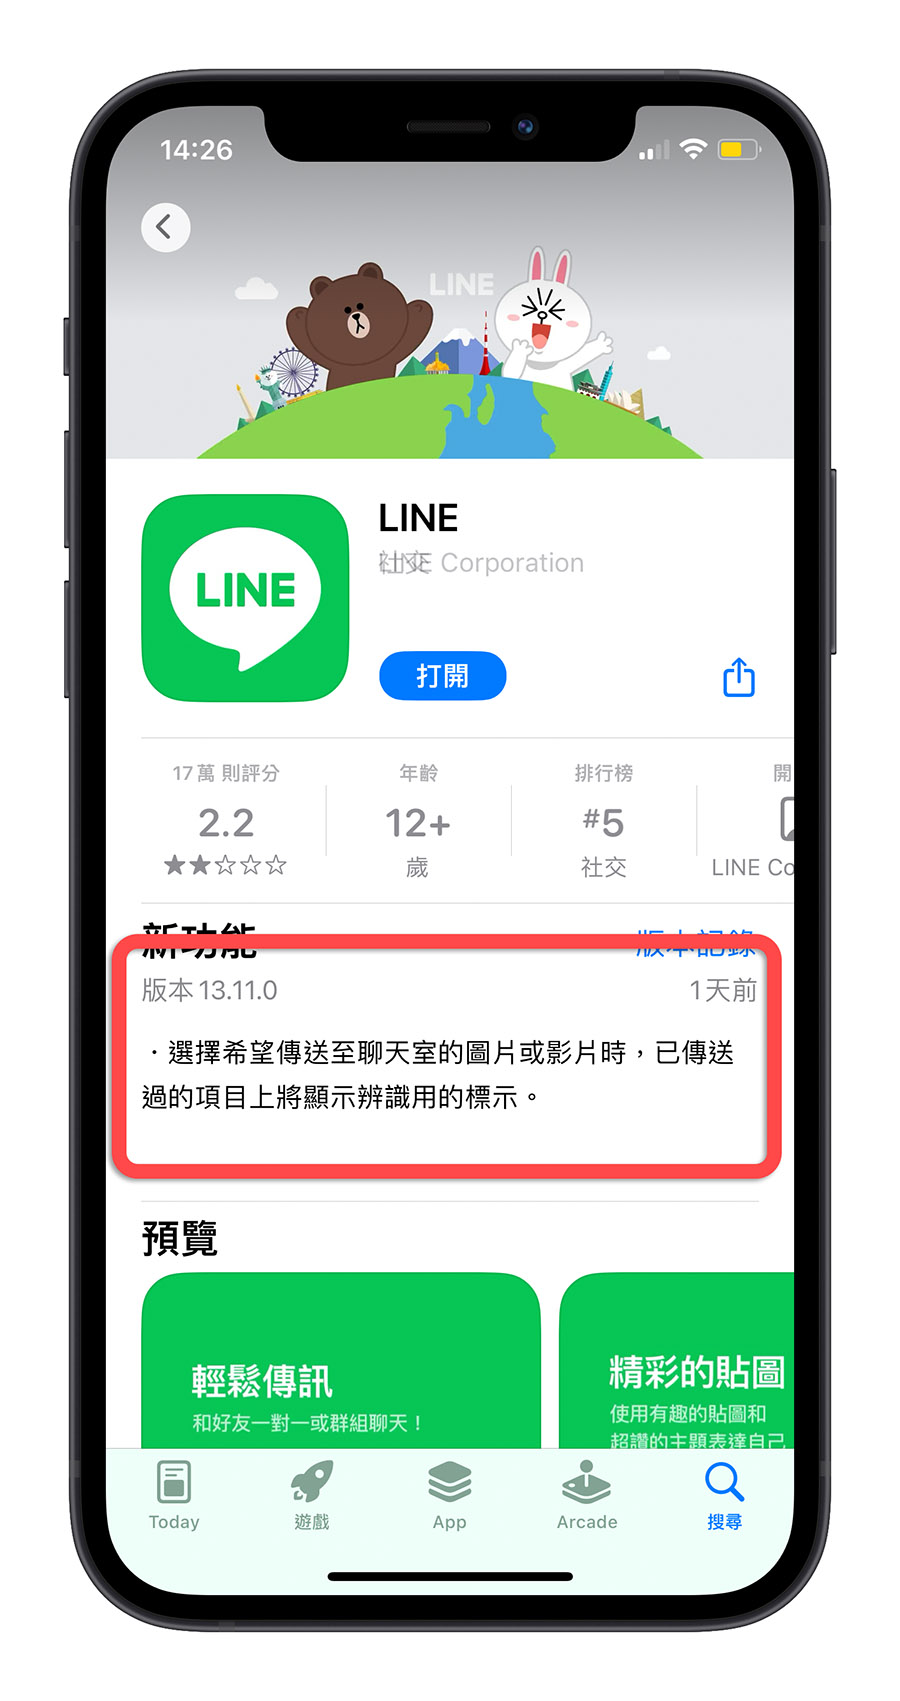 LINE Bug iOS 17 鍵盤 輸入框 不見